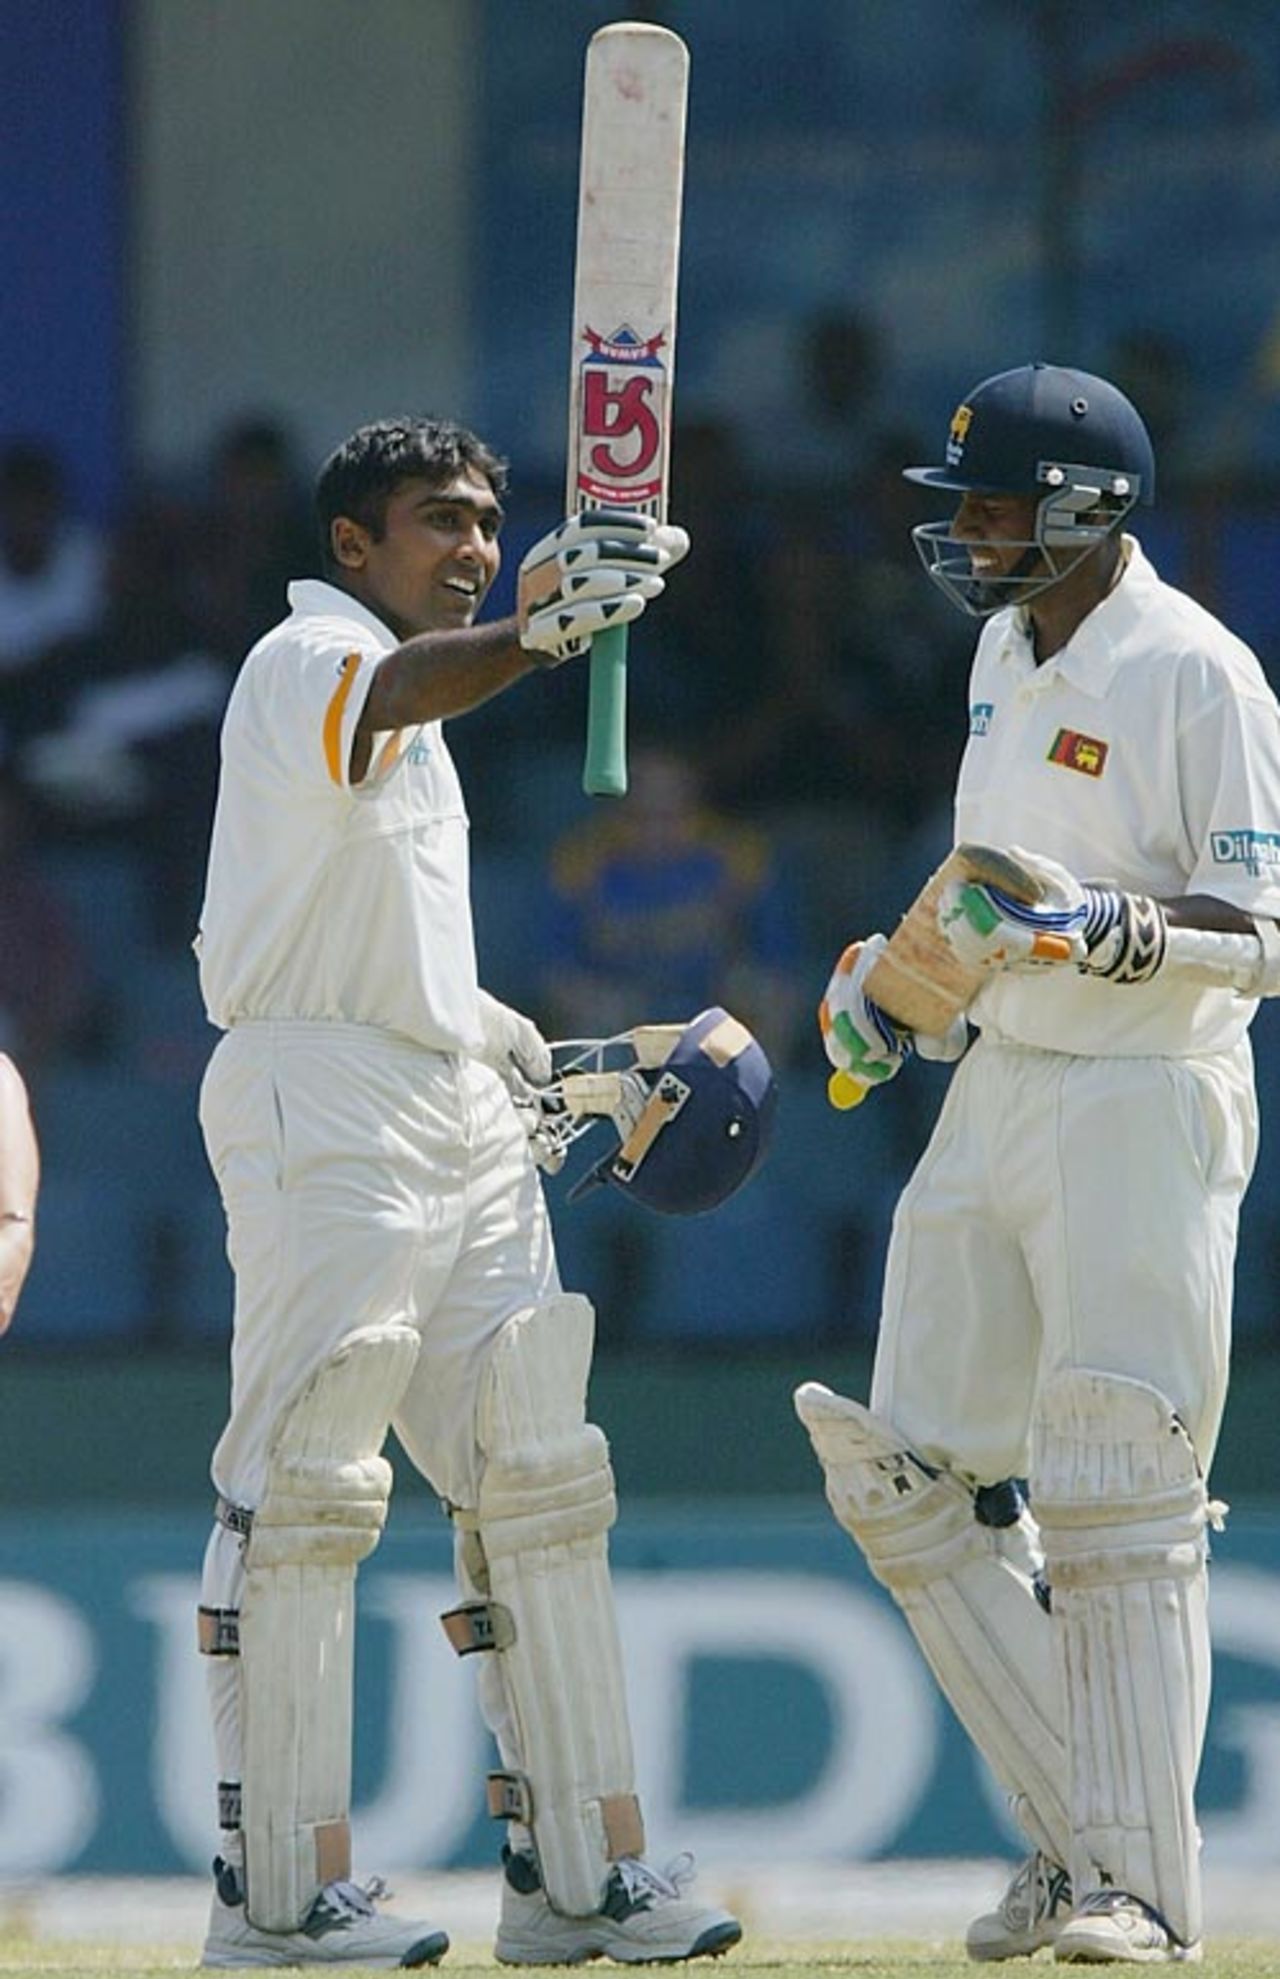 Mahela Jayawardene raises his bat and accepts the congratulations from Thilan Samaraweera on reaching his hundred, Sri Lanka v England, 3rd Test, Colombo, 3rd day, December 20, 2003